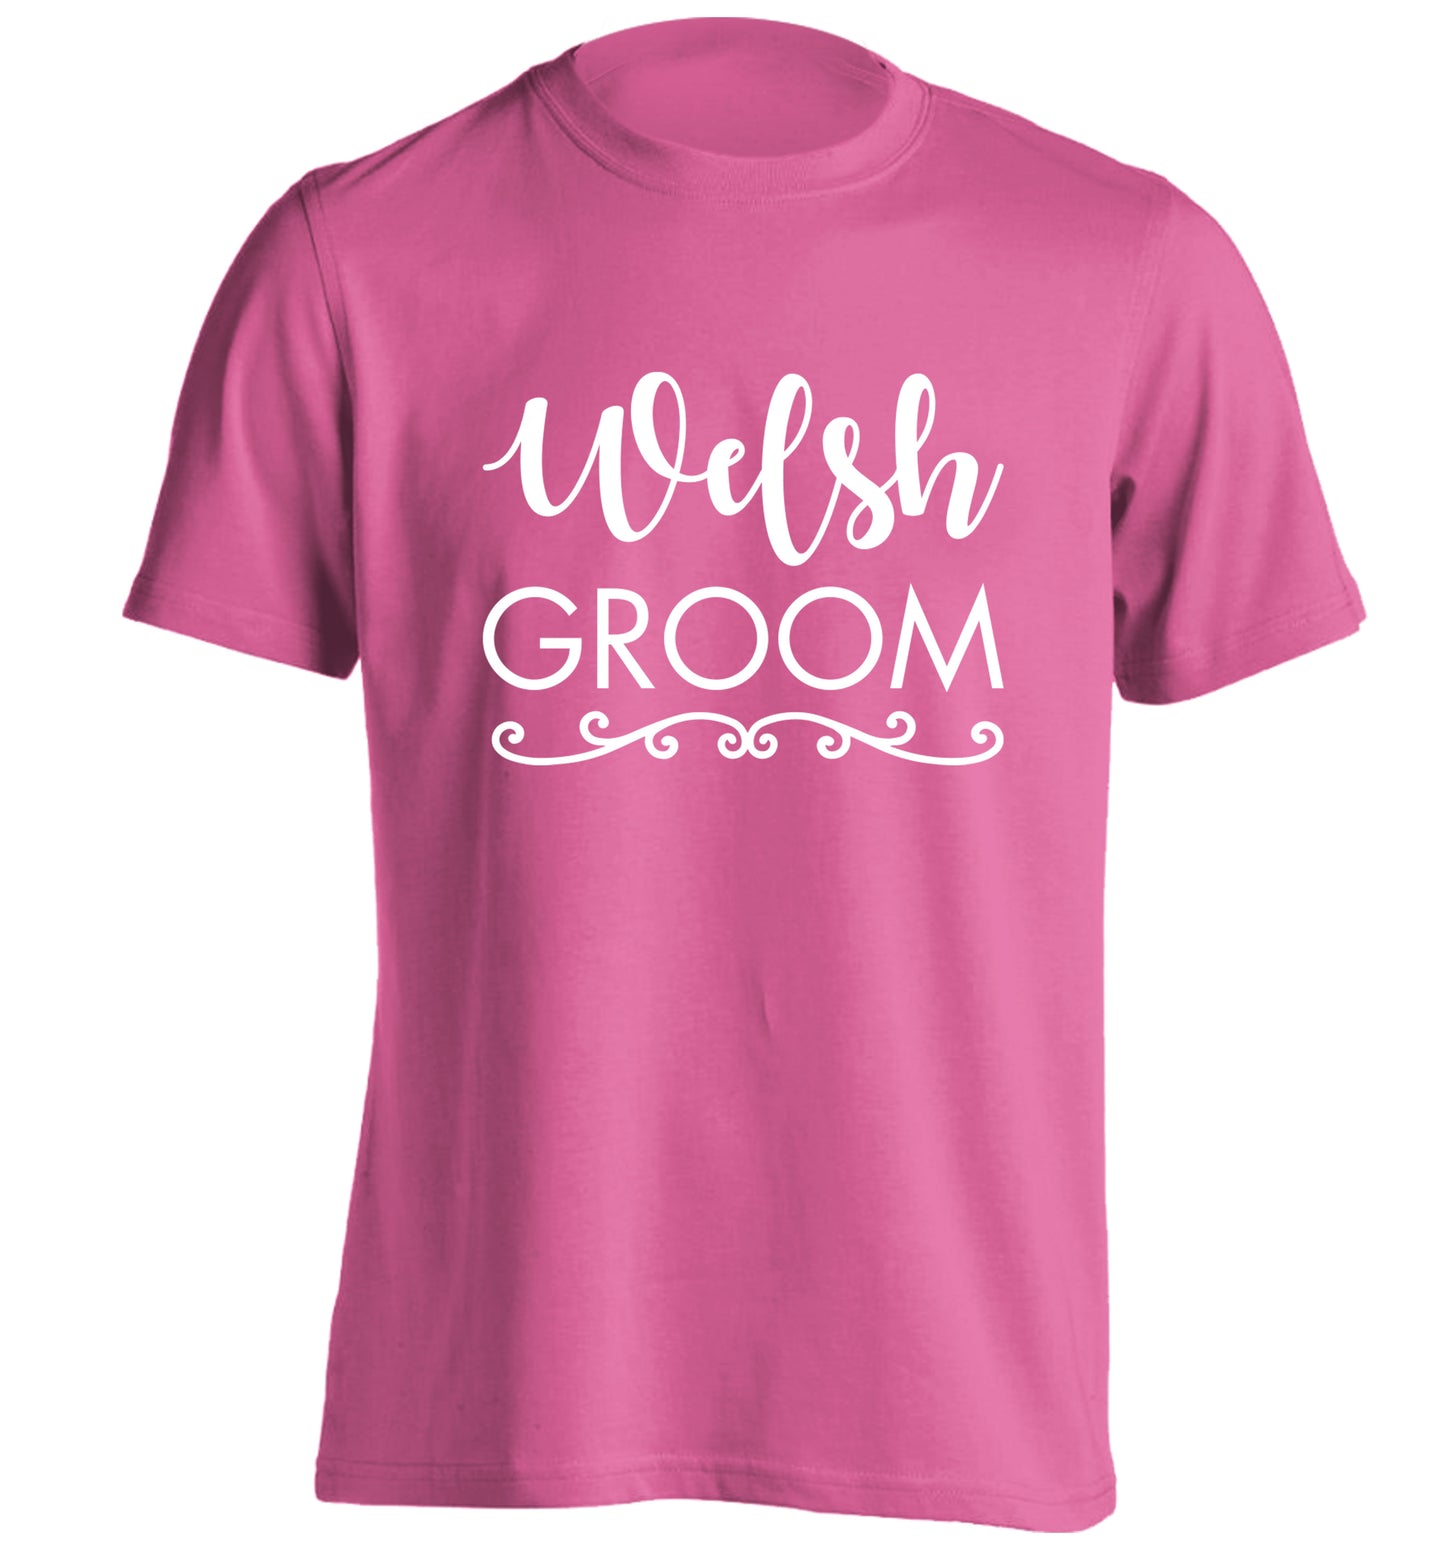 Welsh groom adults unisex pink Tshirt 2XL